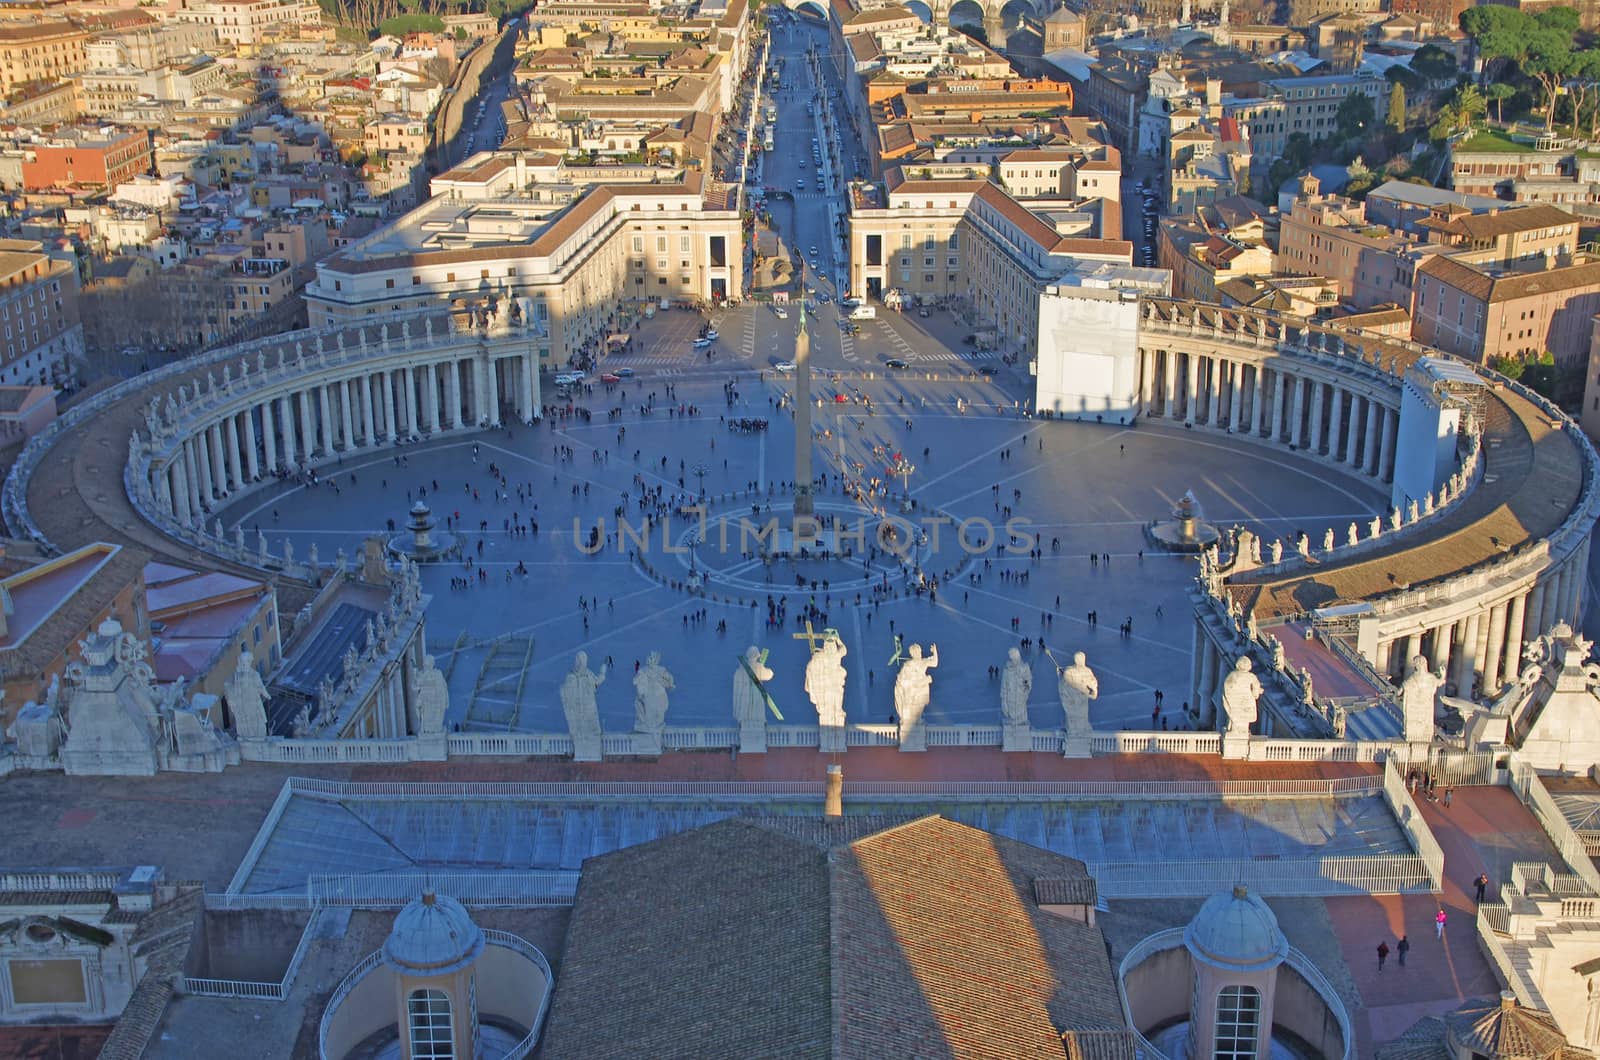 Saint Peter Basilica Square with Bernini's Colonnade